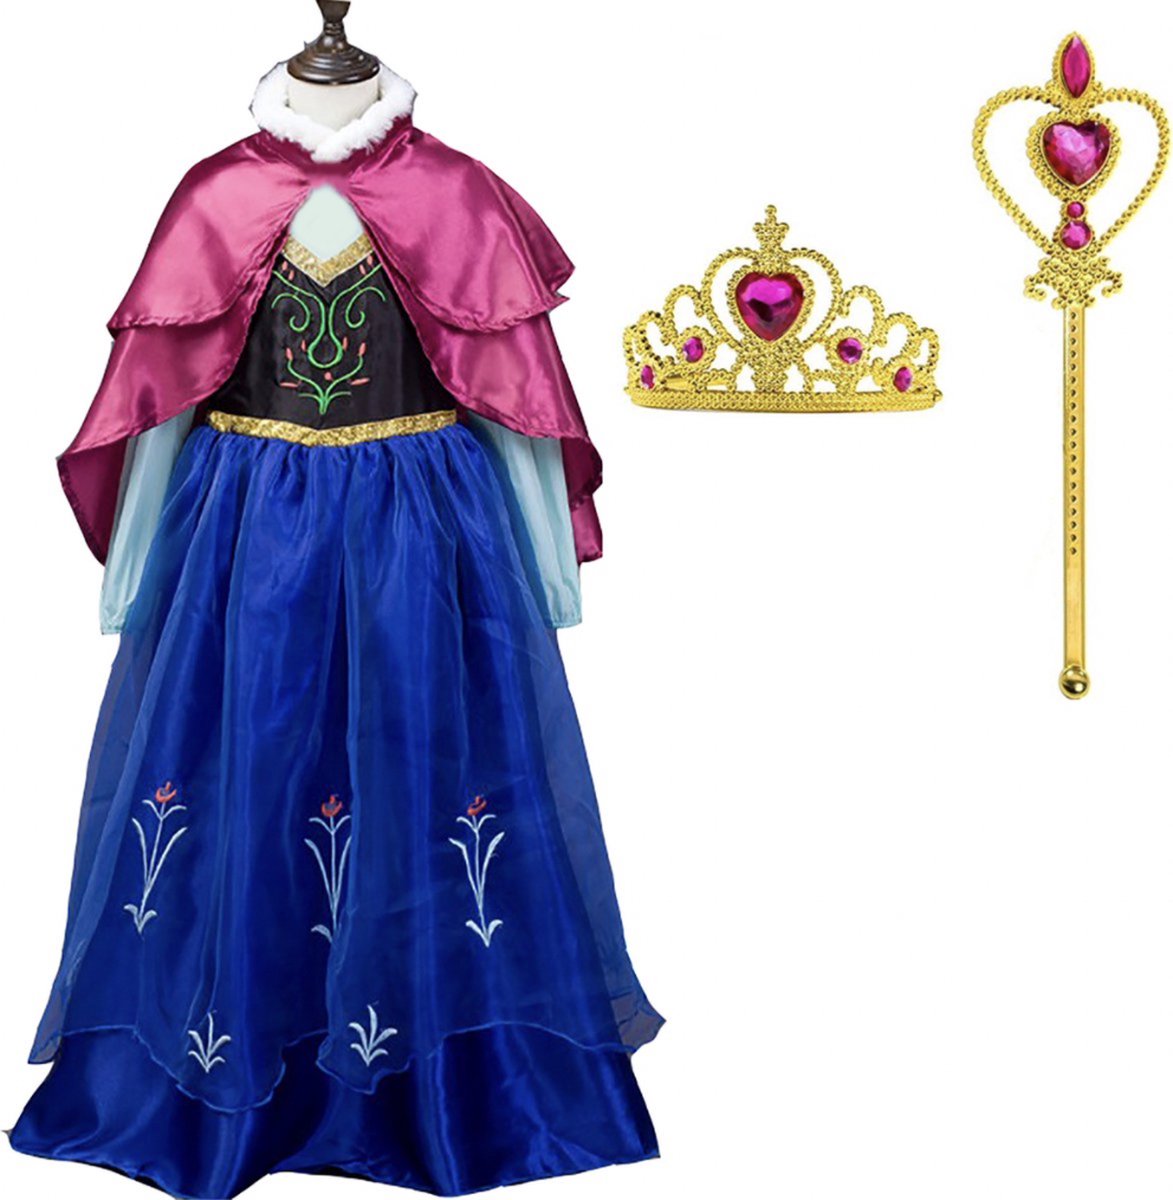 Het Betere Merk - Prinsessenjurk meisje - Blauwe verkleedjurk - Roze cape - maat 122/128 (130) - Speelgoed meisje - Tiara - Kroon - Toverstaf prinses - Verkleedkleren meisje - Carnavalskleren meisje